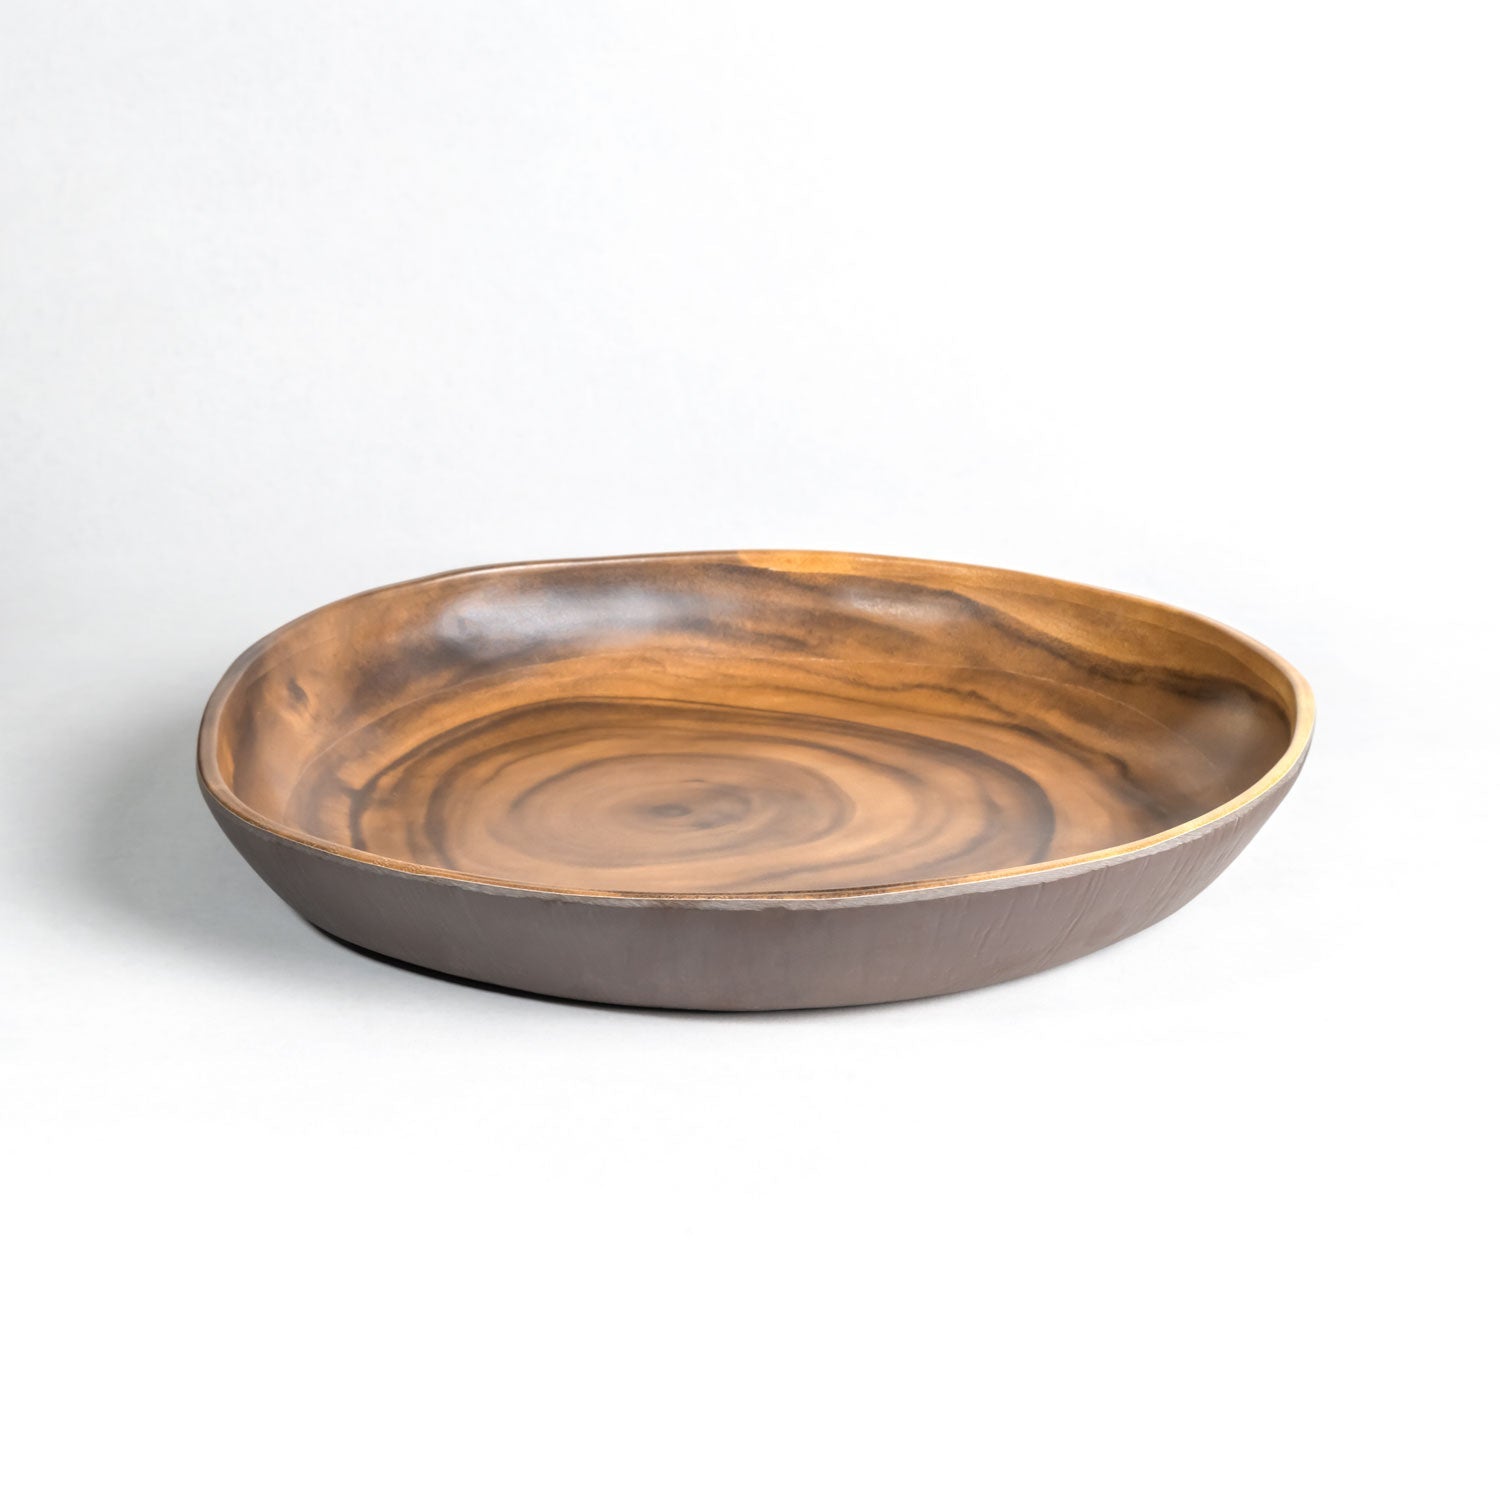 Merritt Designs Sequoia Wood 12 inch Melamine Serving Tray